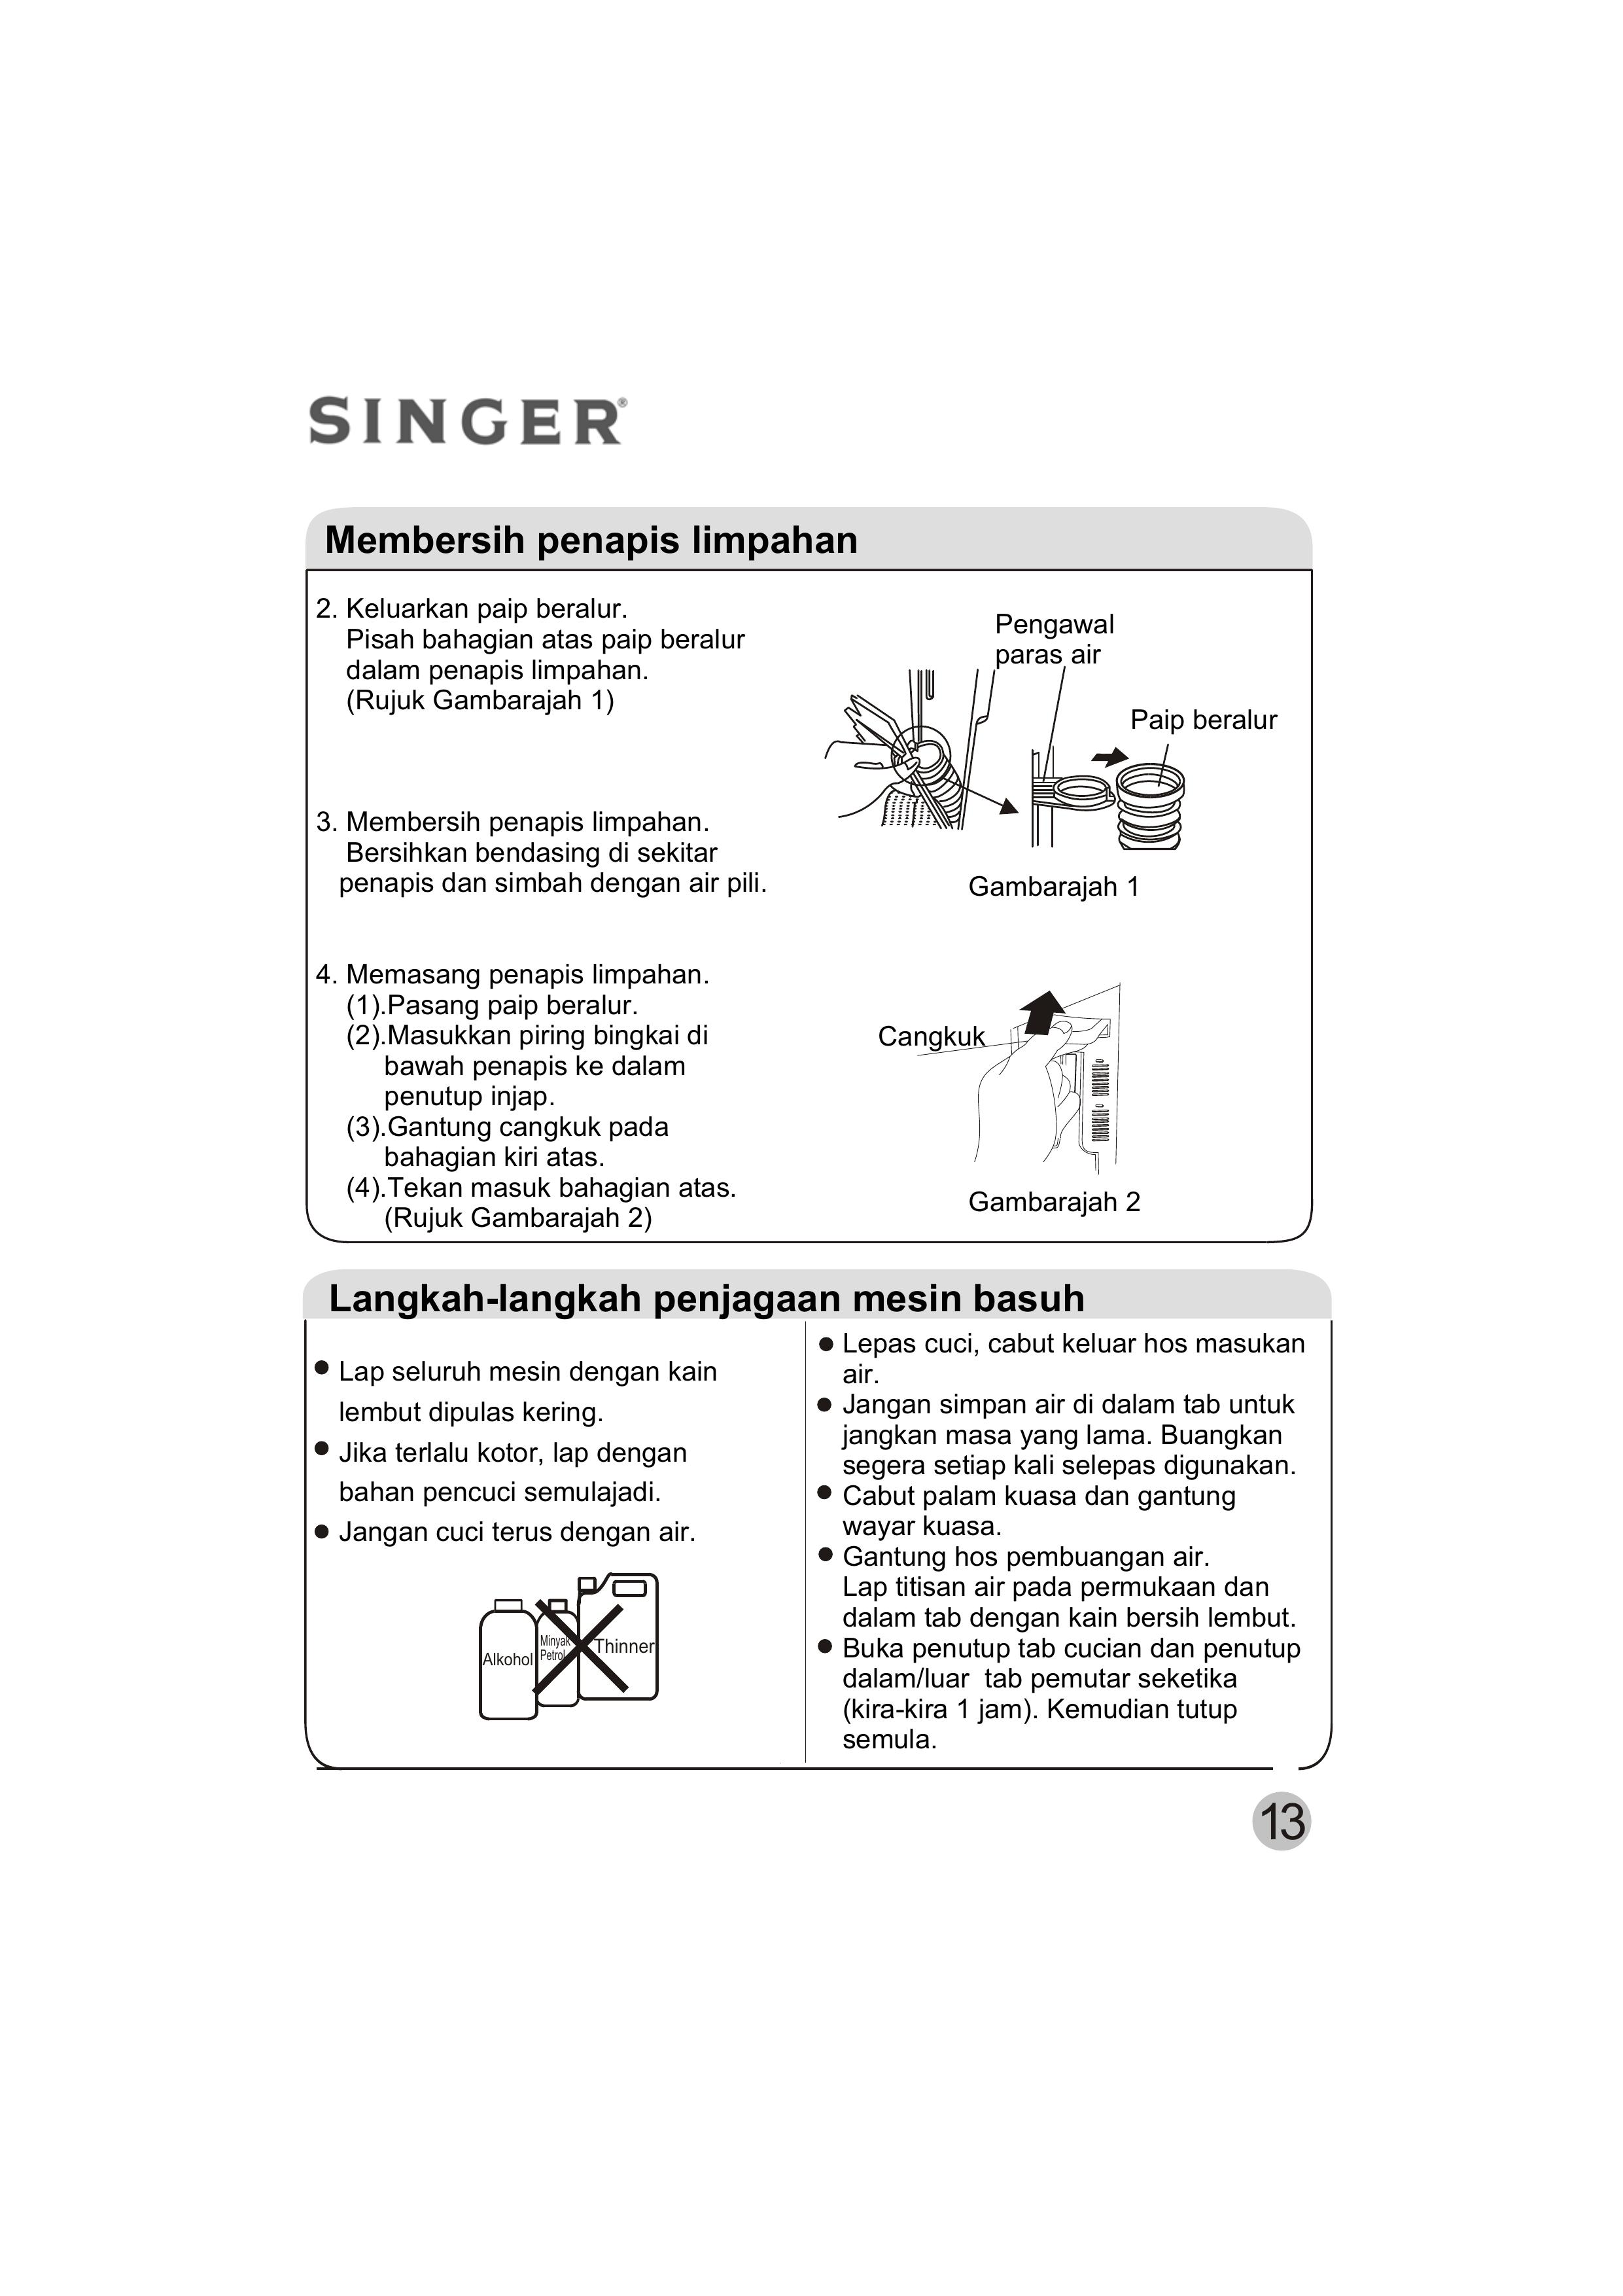 Singer WT5113 Washer/Dryer User Manual (Page 31)